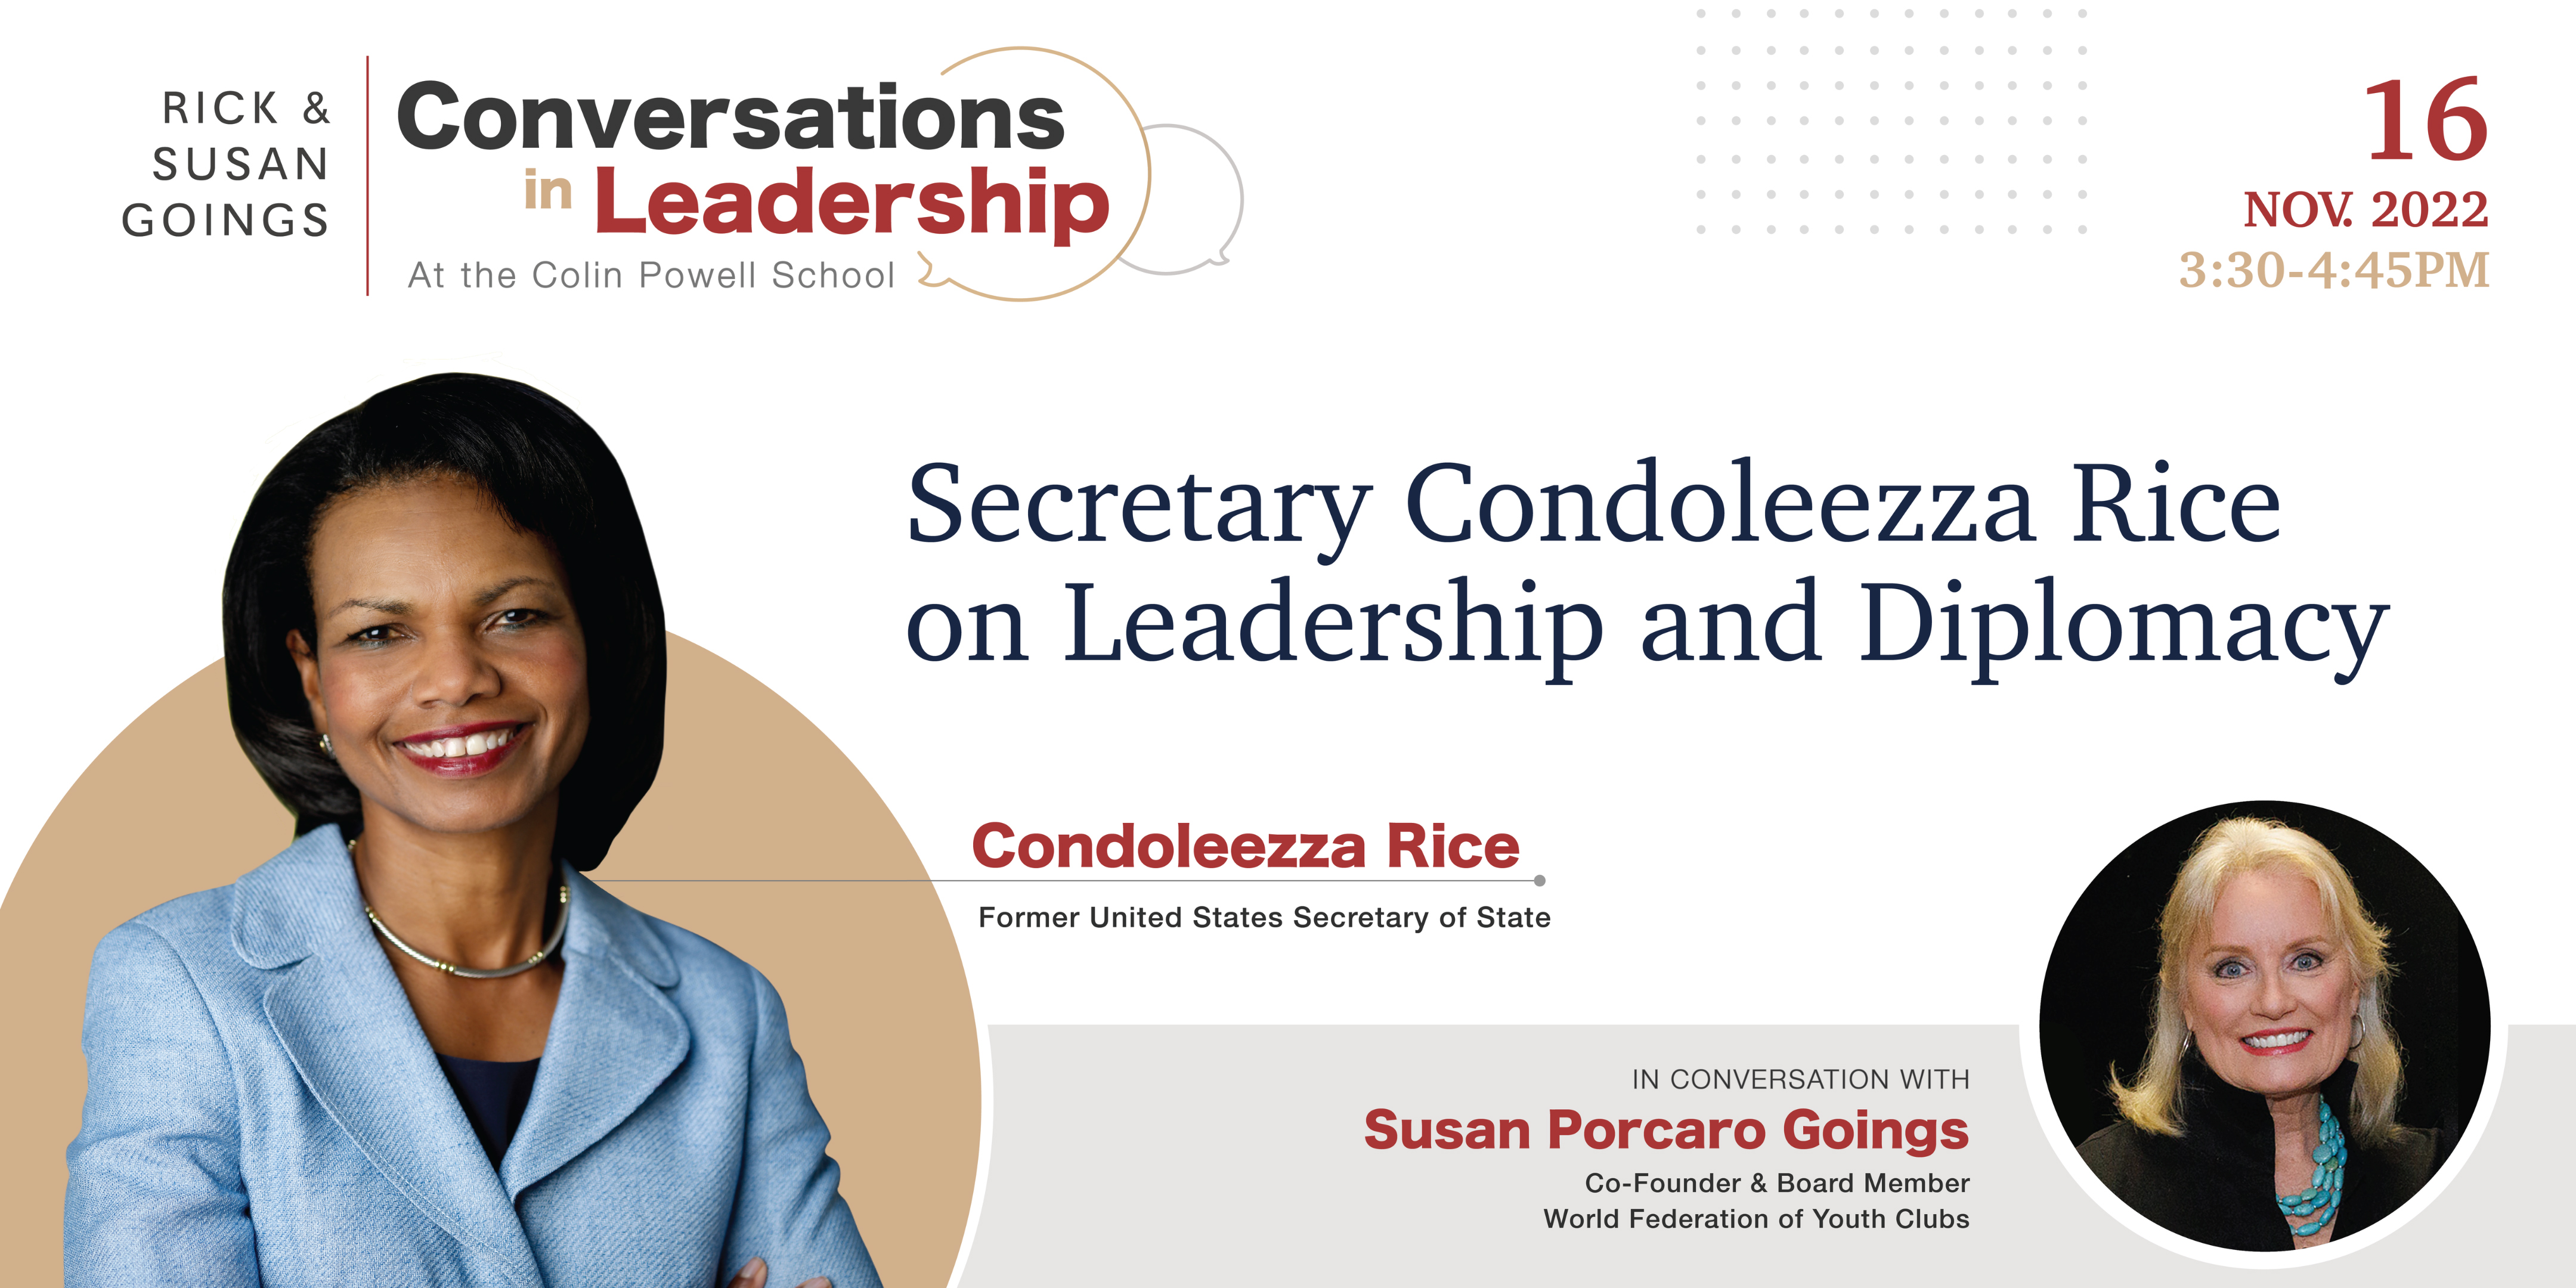 Conversation in Leadership: Condoleezza Rice Event Poster